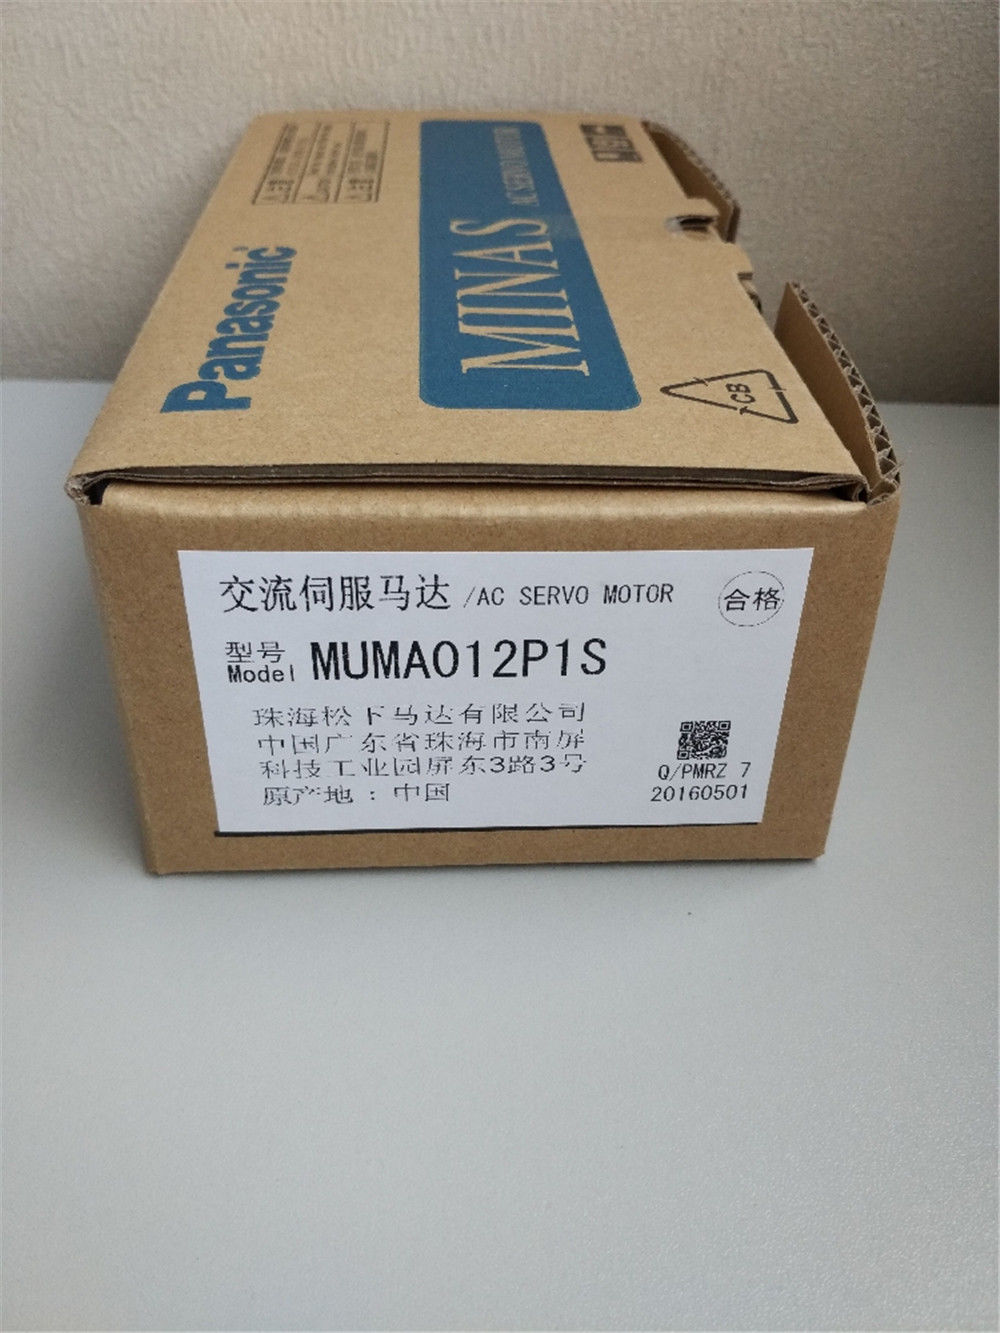 Brand New PANASONIC AC Servo motor MUMA012P1S in box - zum Schließen ins Bild klicken